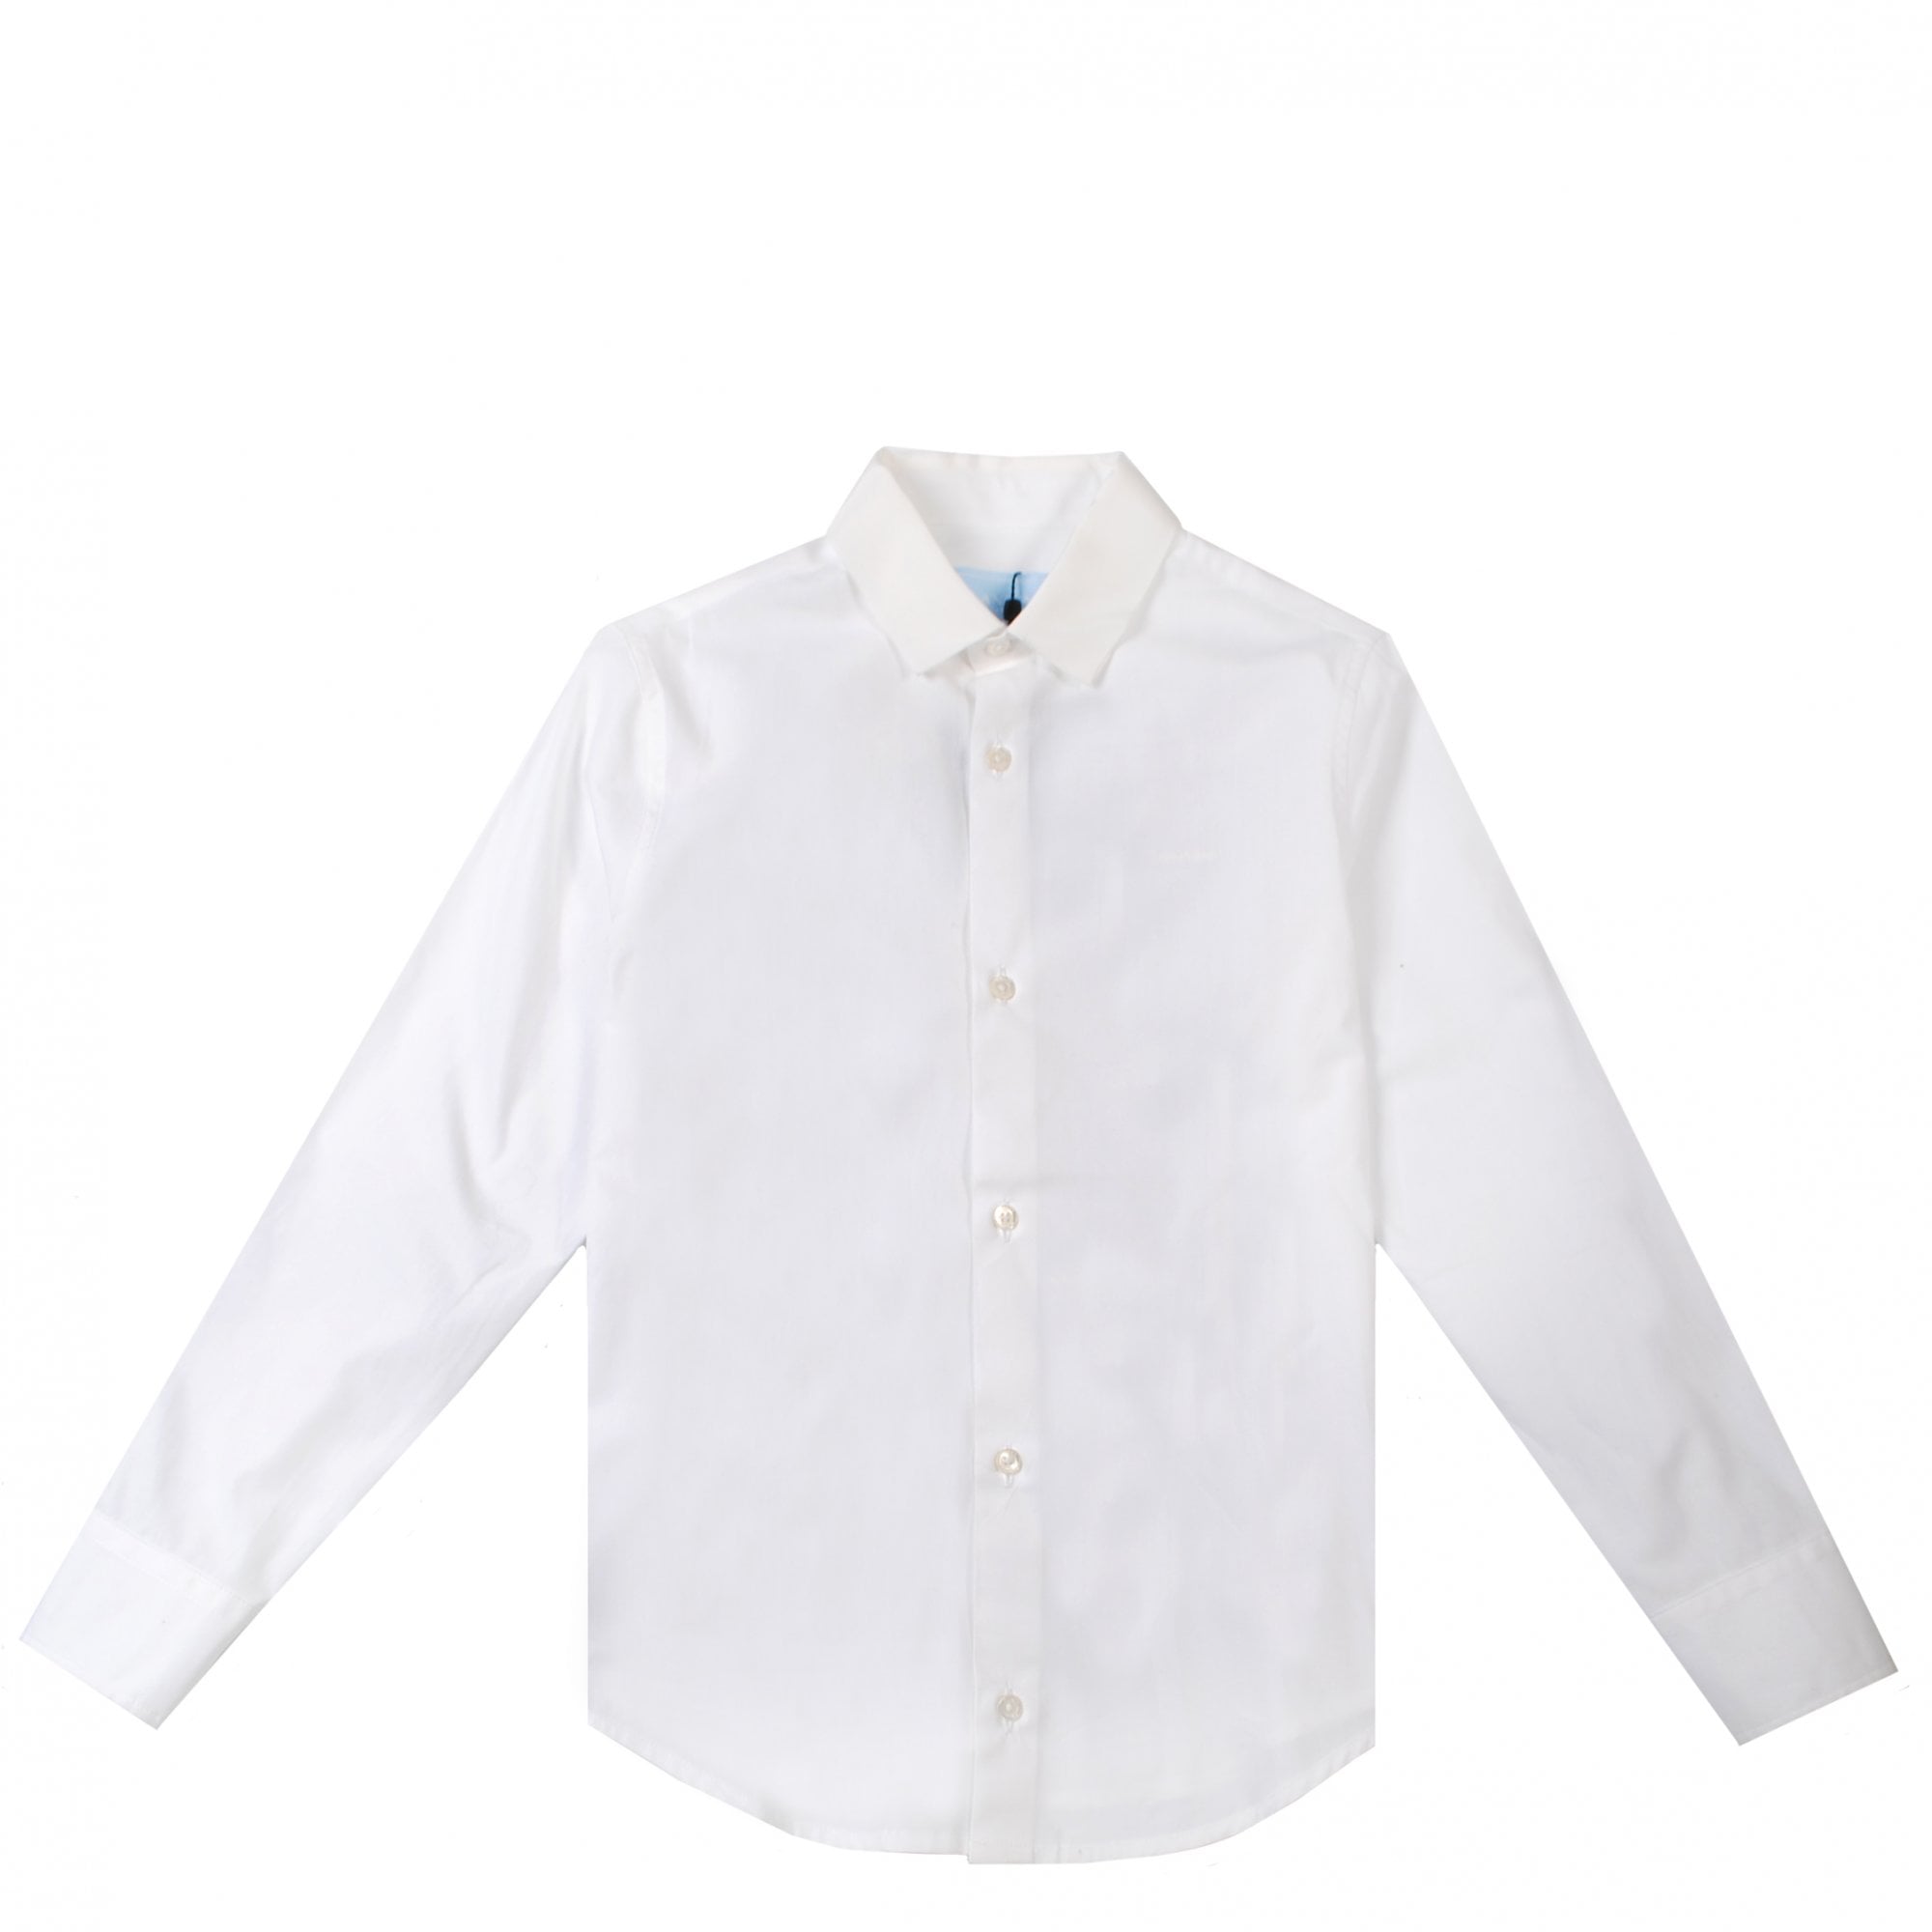 Lanvin Boys Printed Shirt White